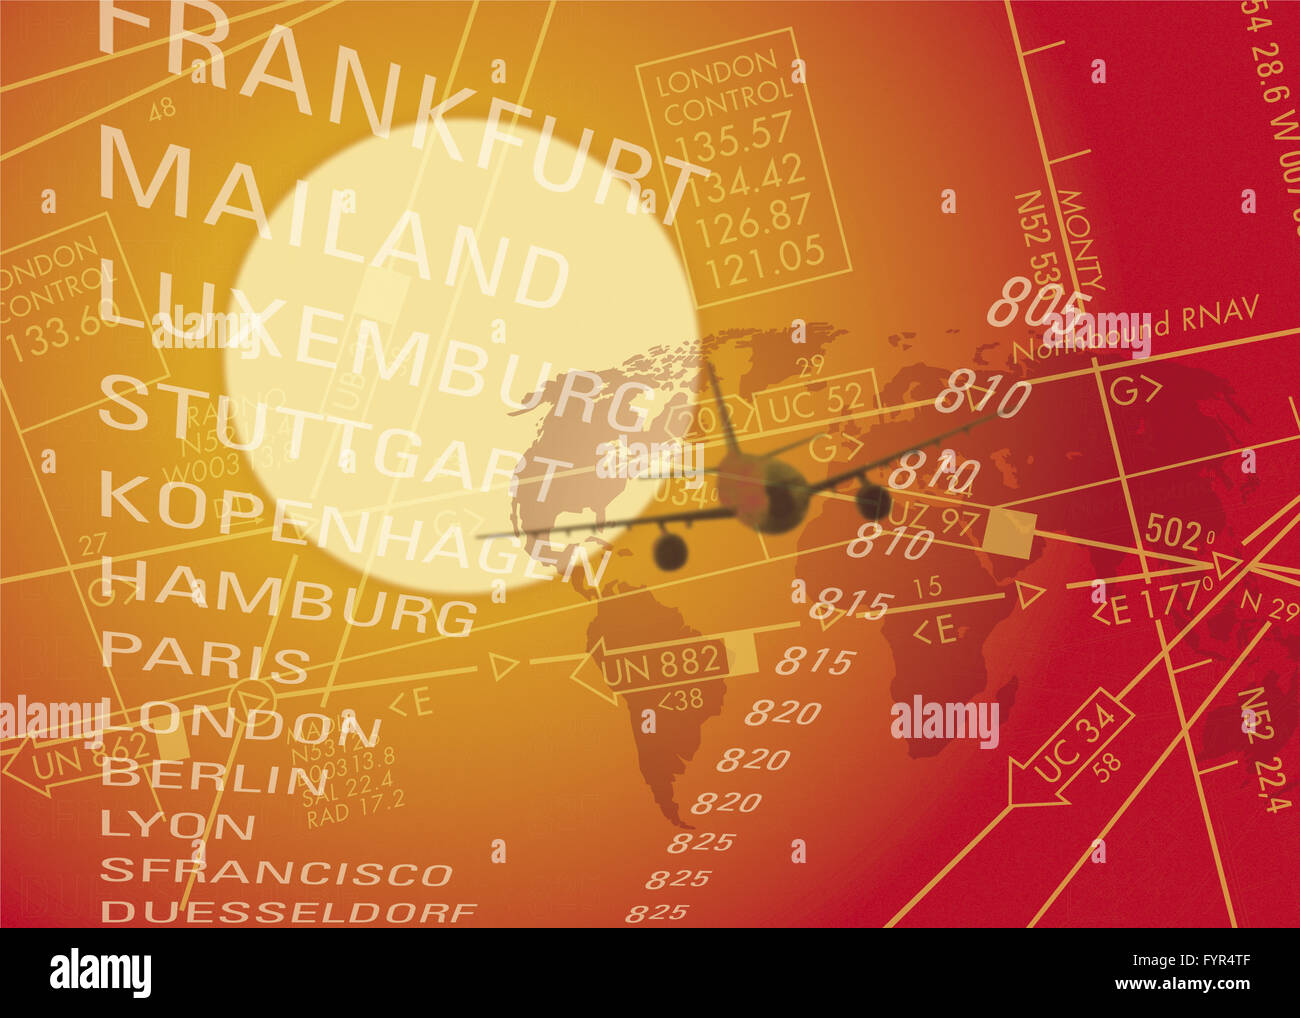 Flight route network (graphic / typographic) Stock Photo